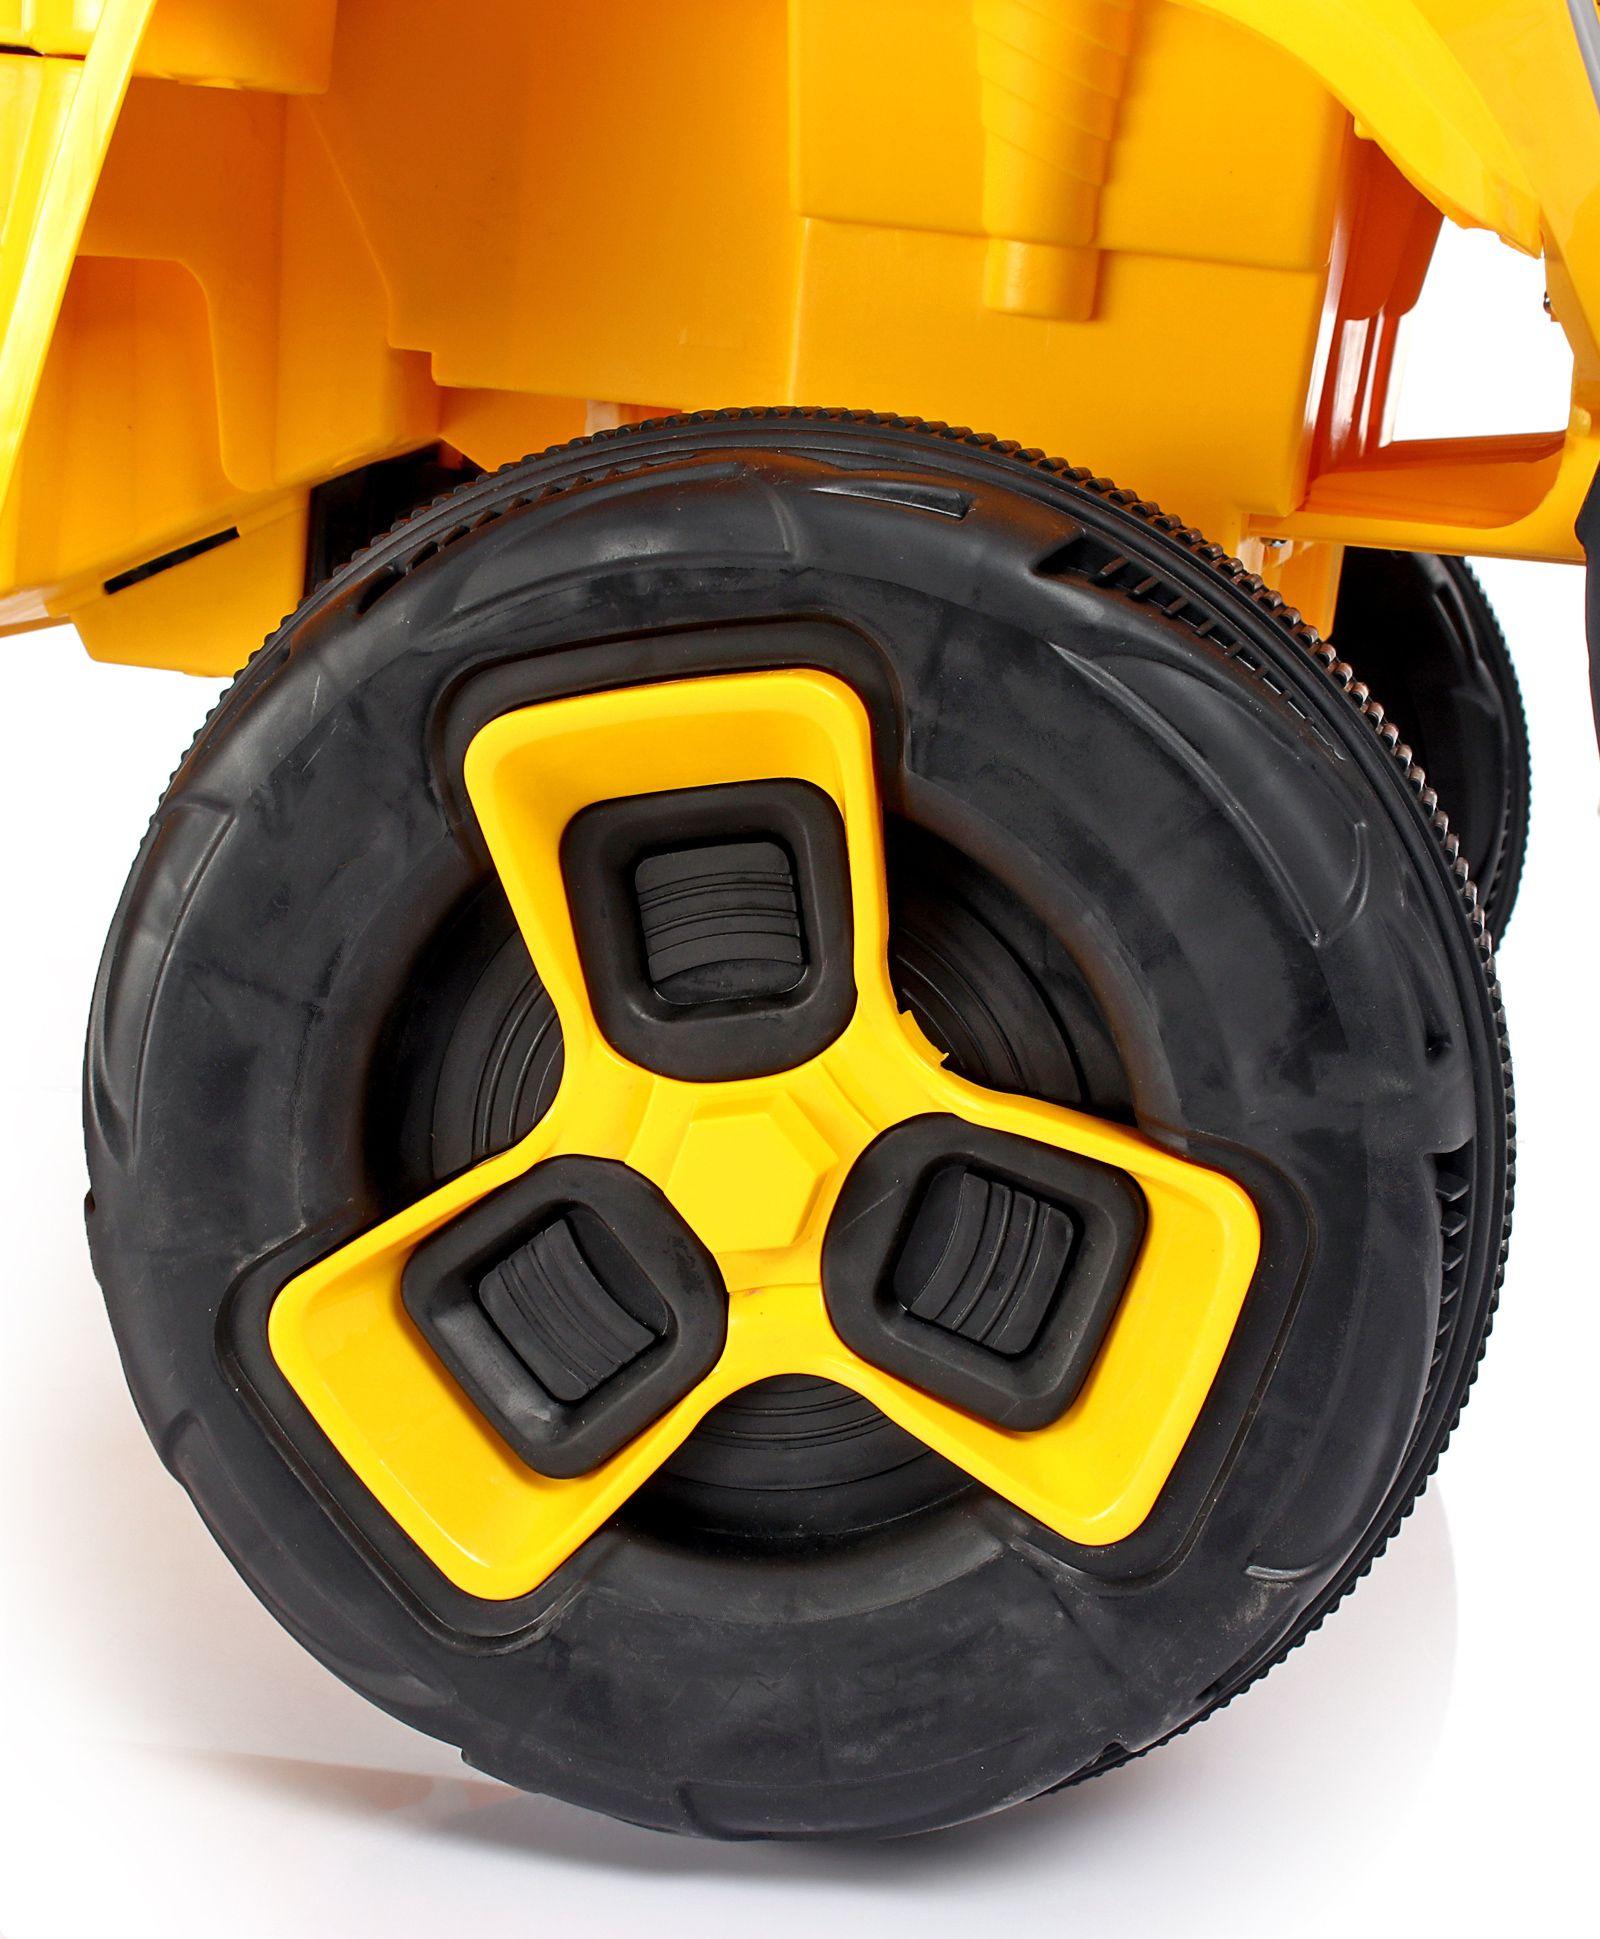 Jumbo-sized Ride-on Yellow 4x4 Battery Operated Bugatti Jeep for Kids - 11Cart